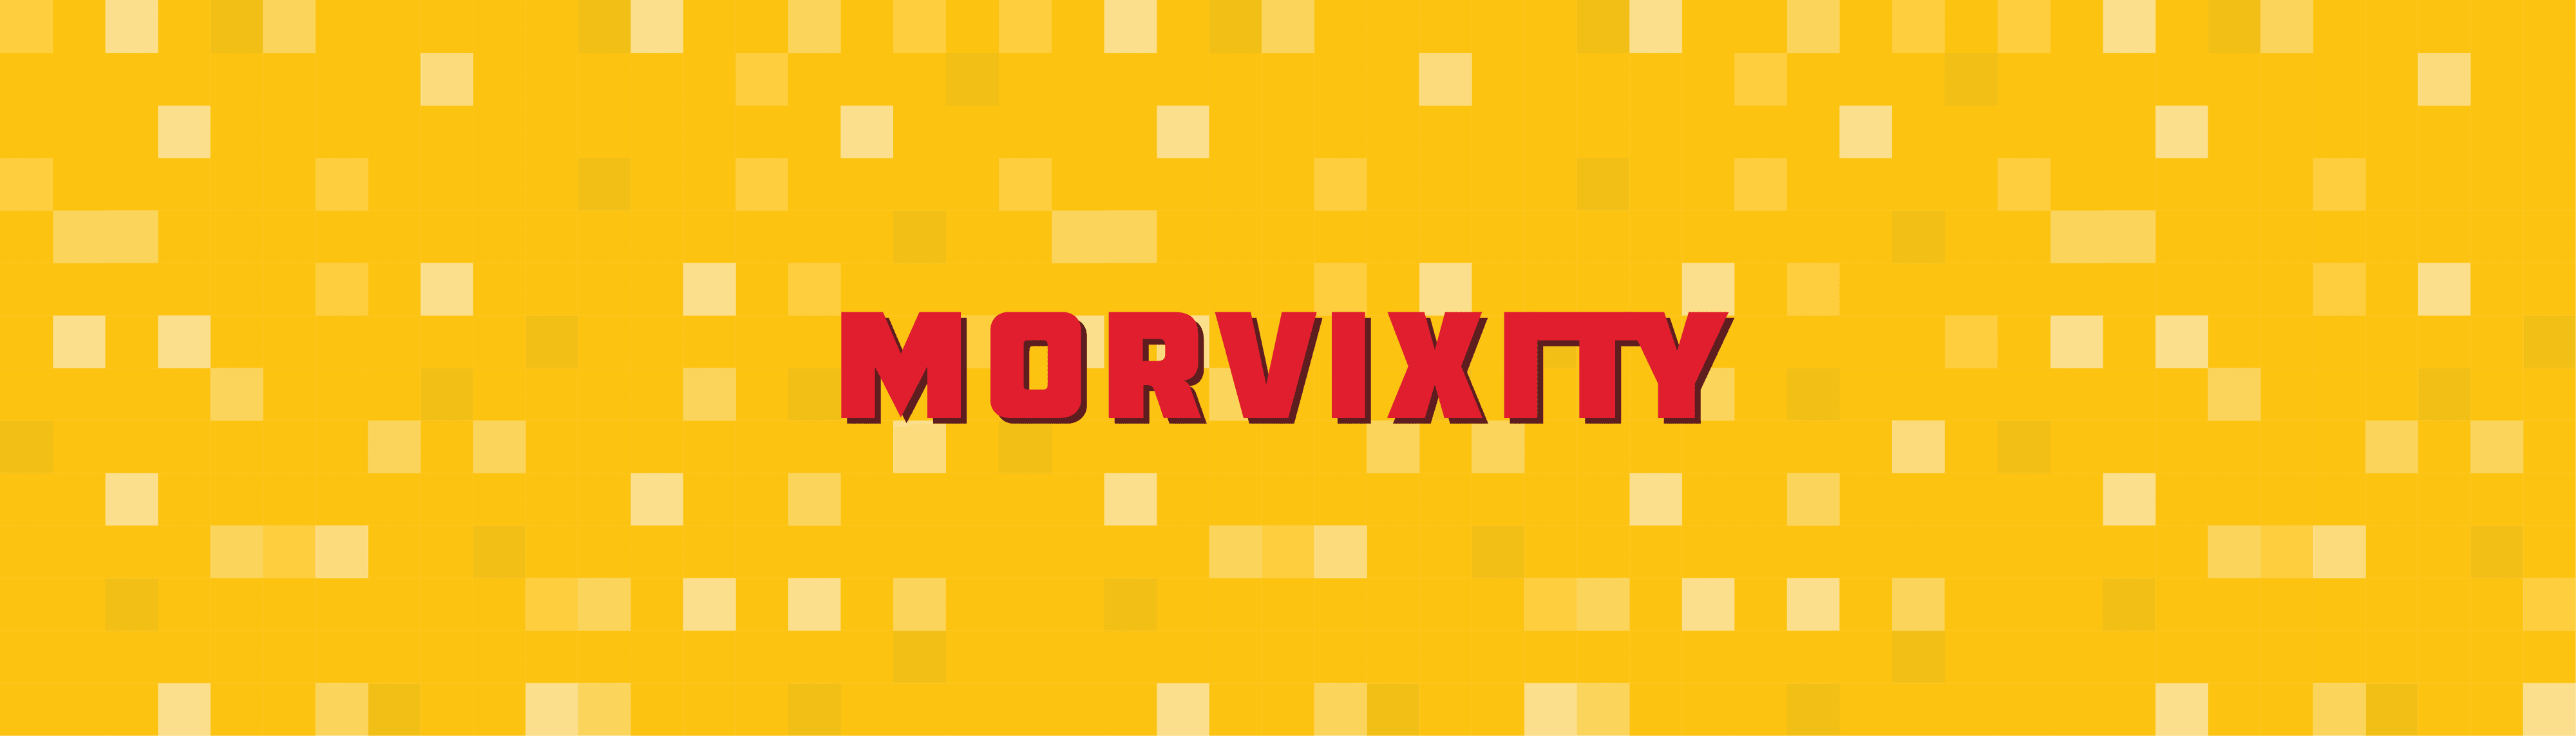 Morvixity banner